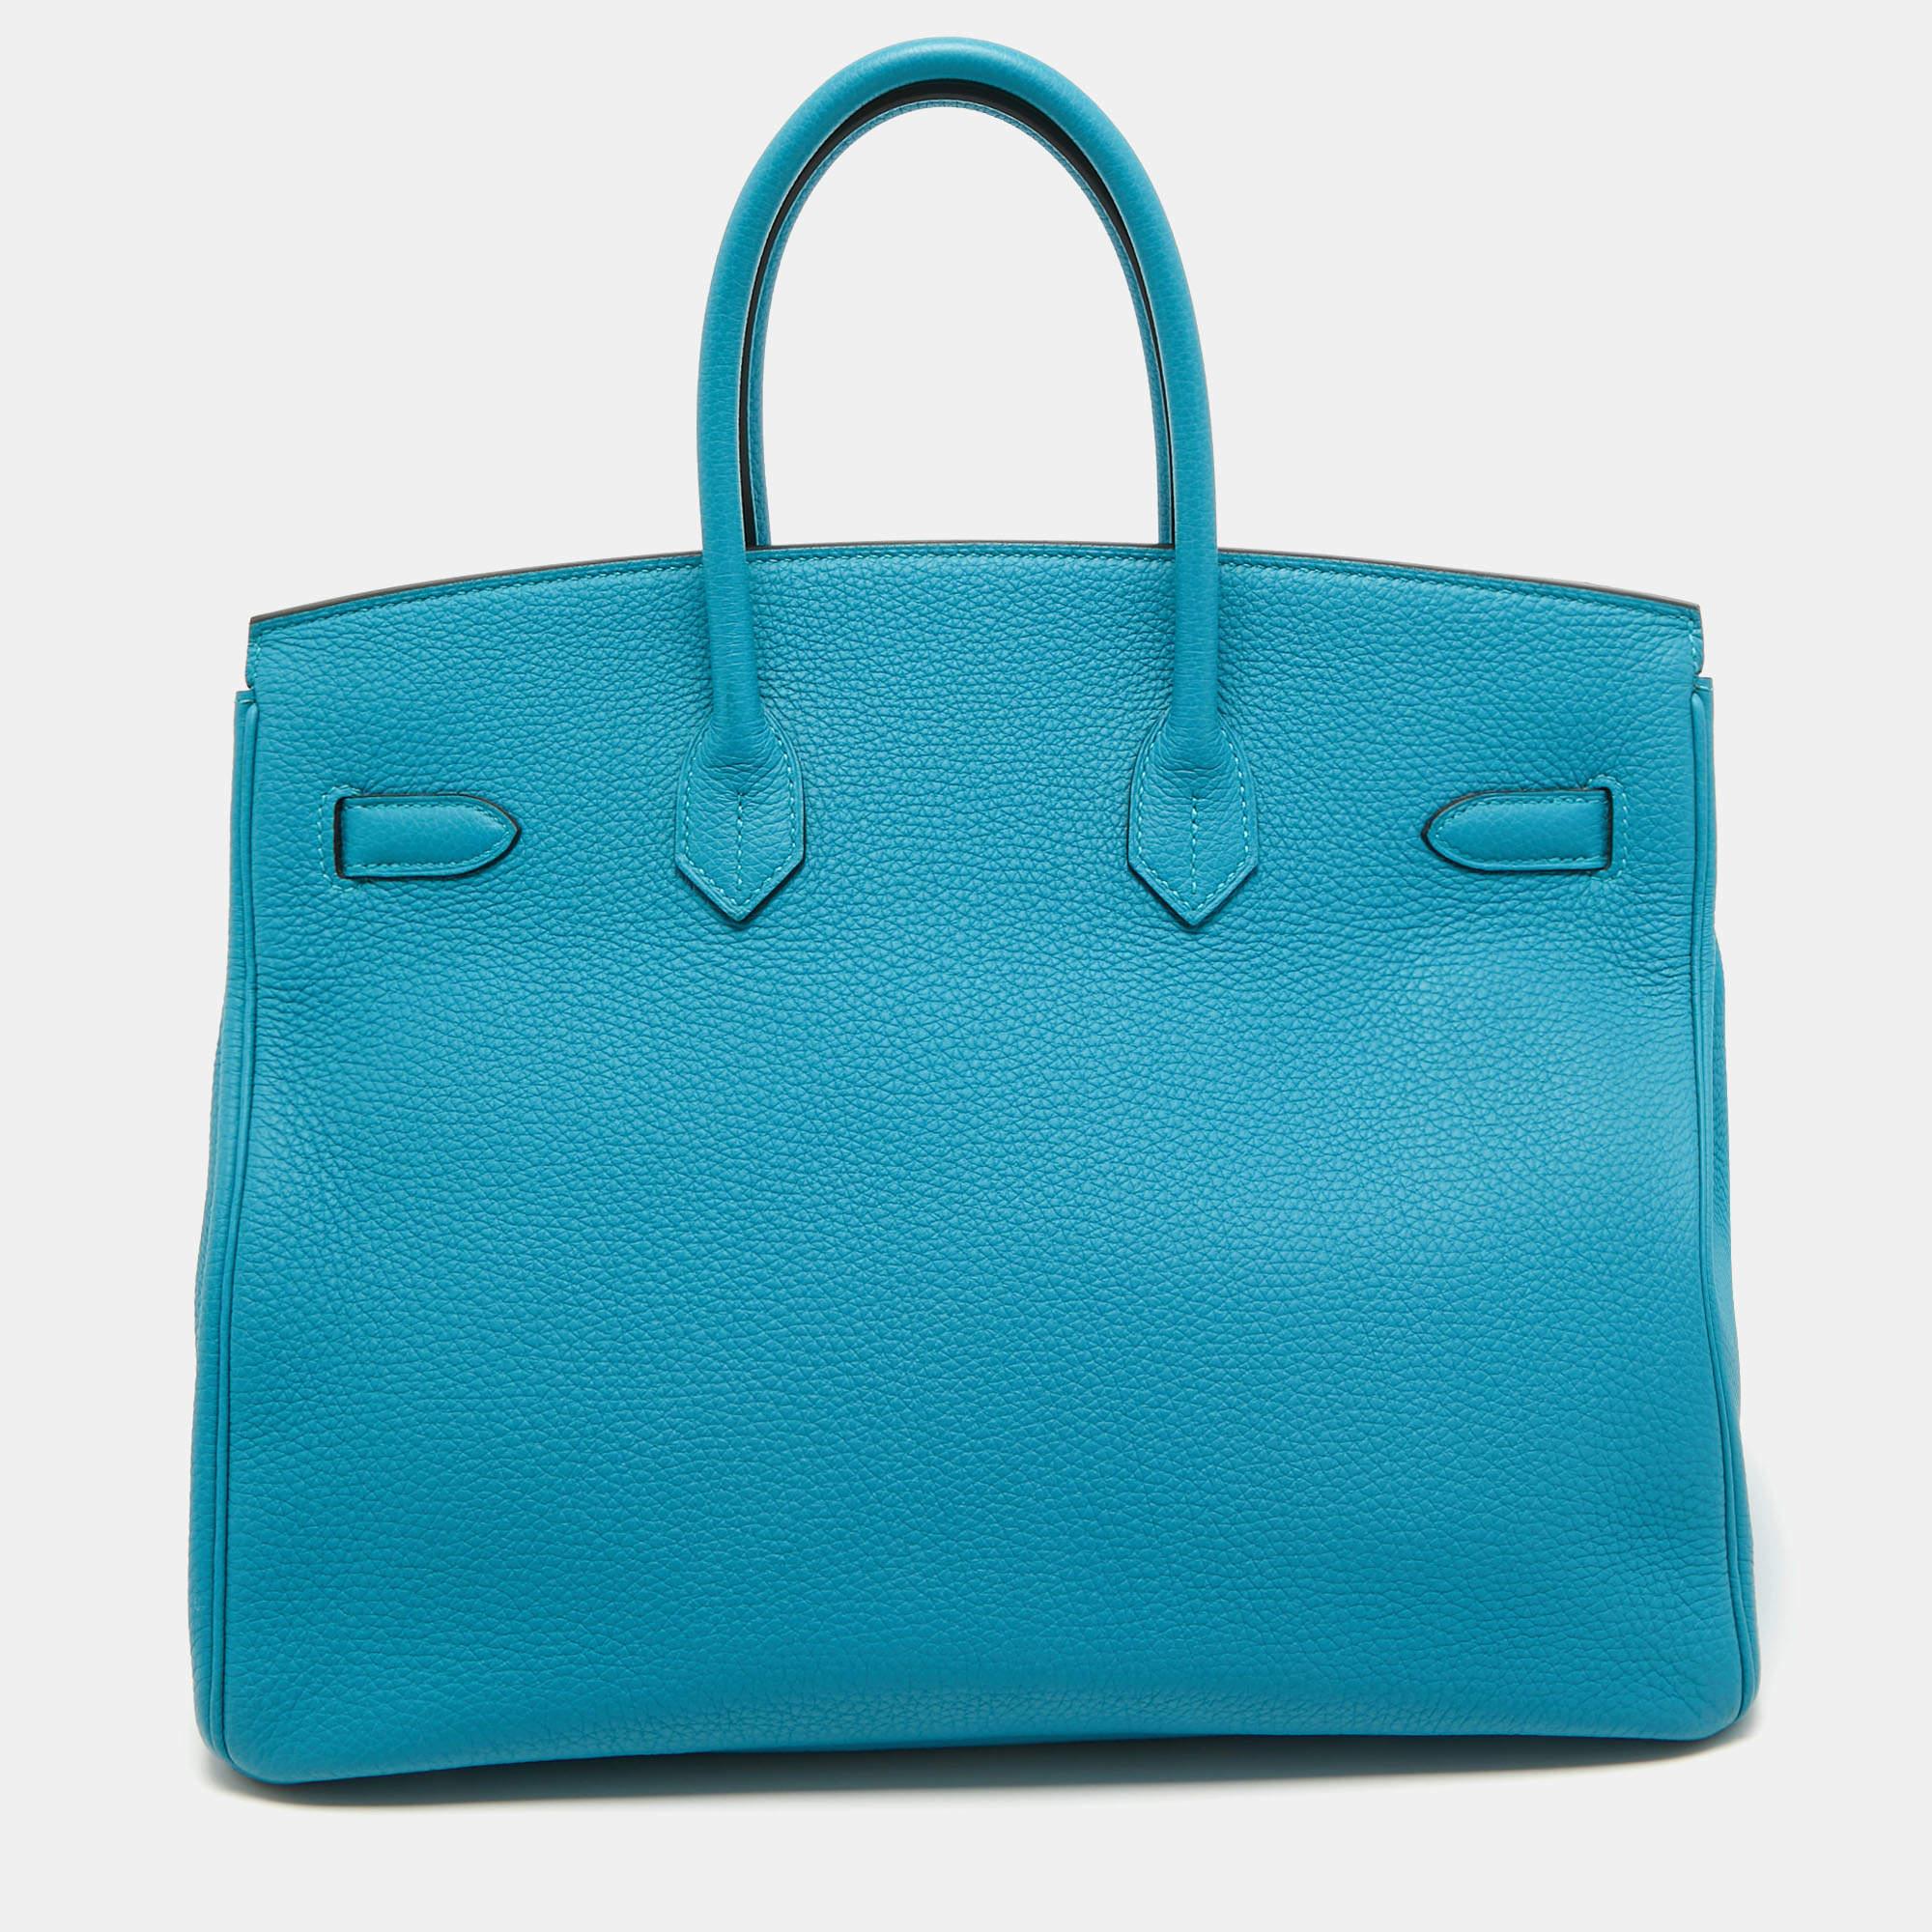 Hermes Turquoise Bleu Togo Cuir Palladium Finish Sac Birkin 35 Pour femmes en vente